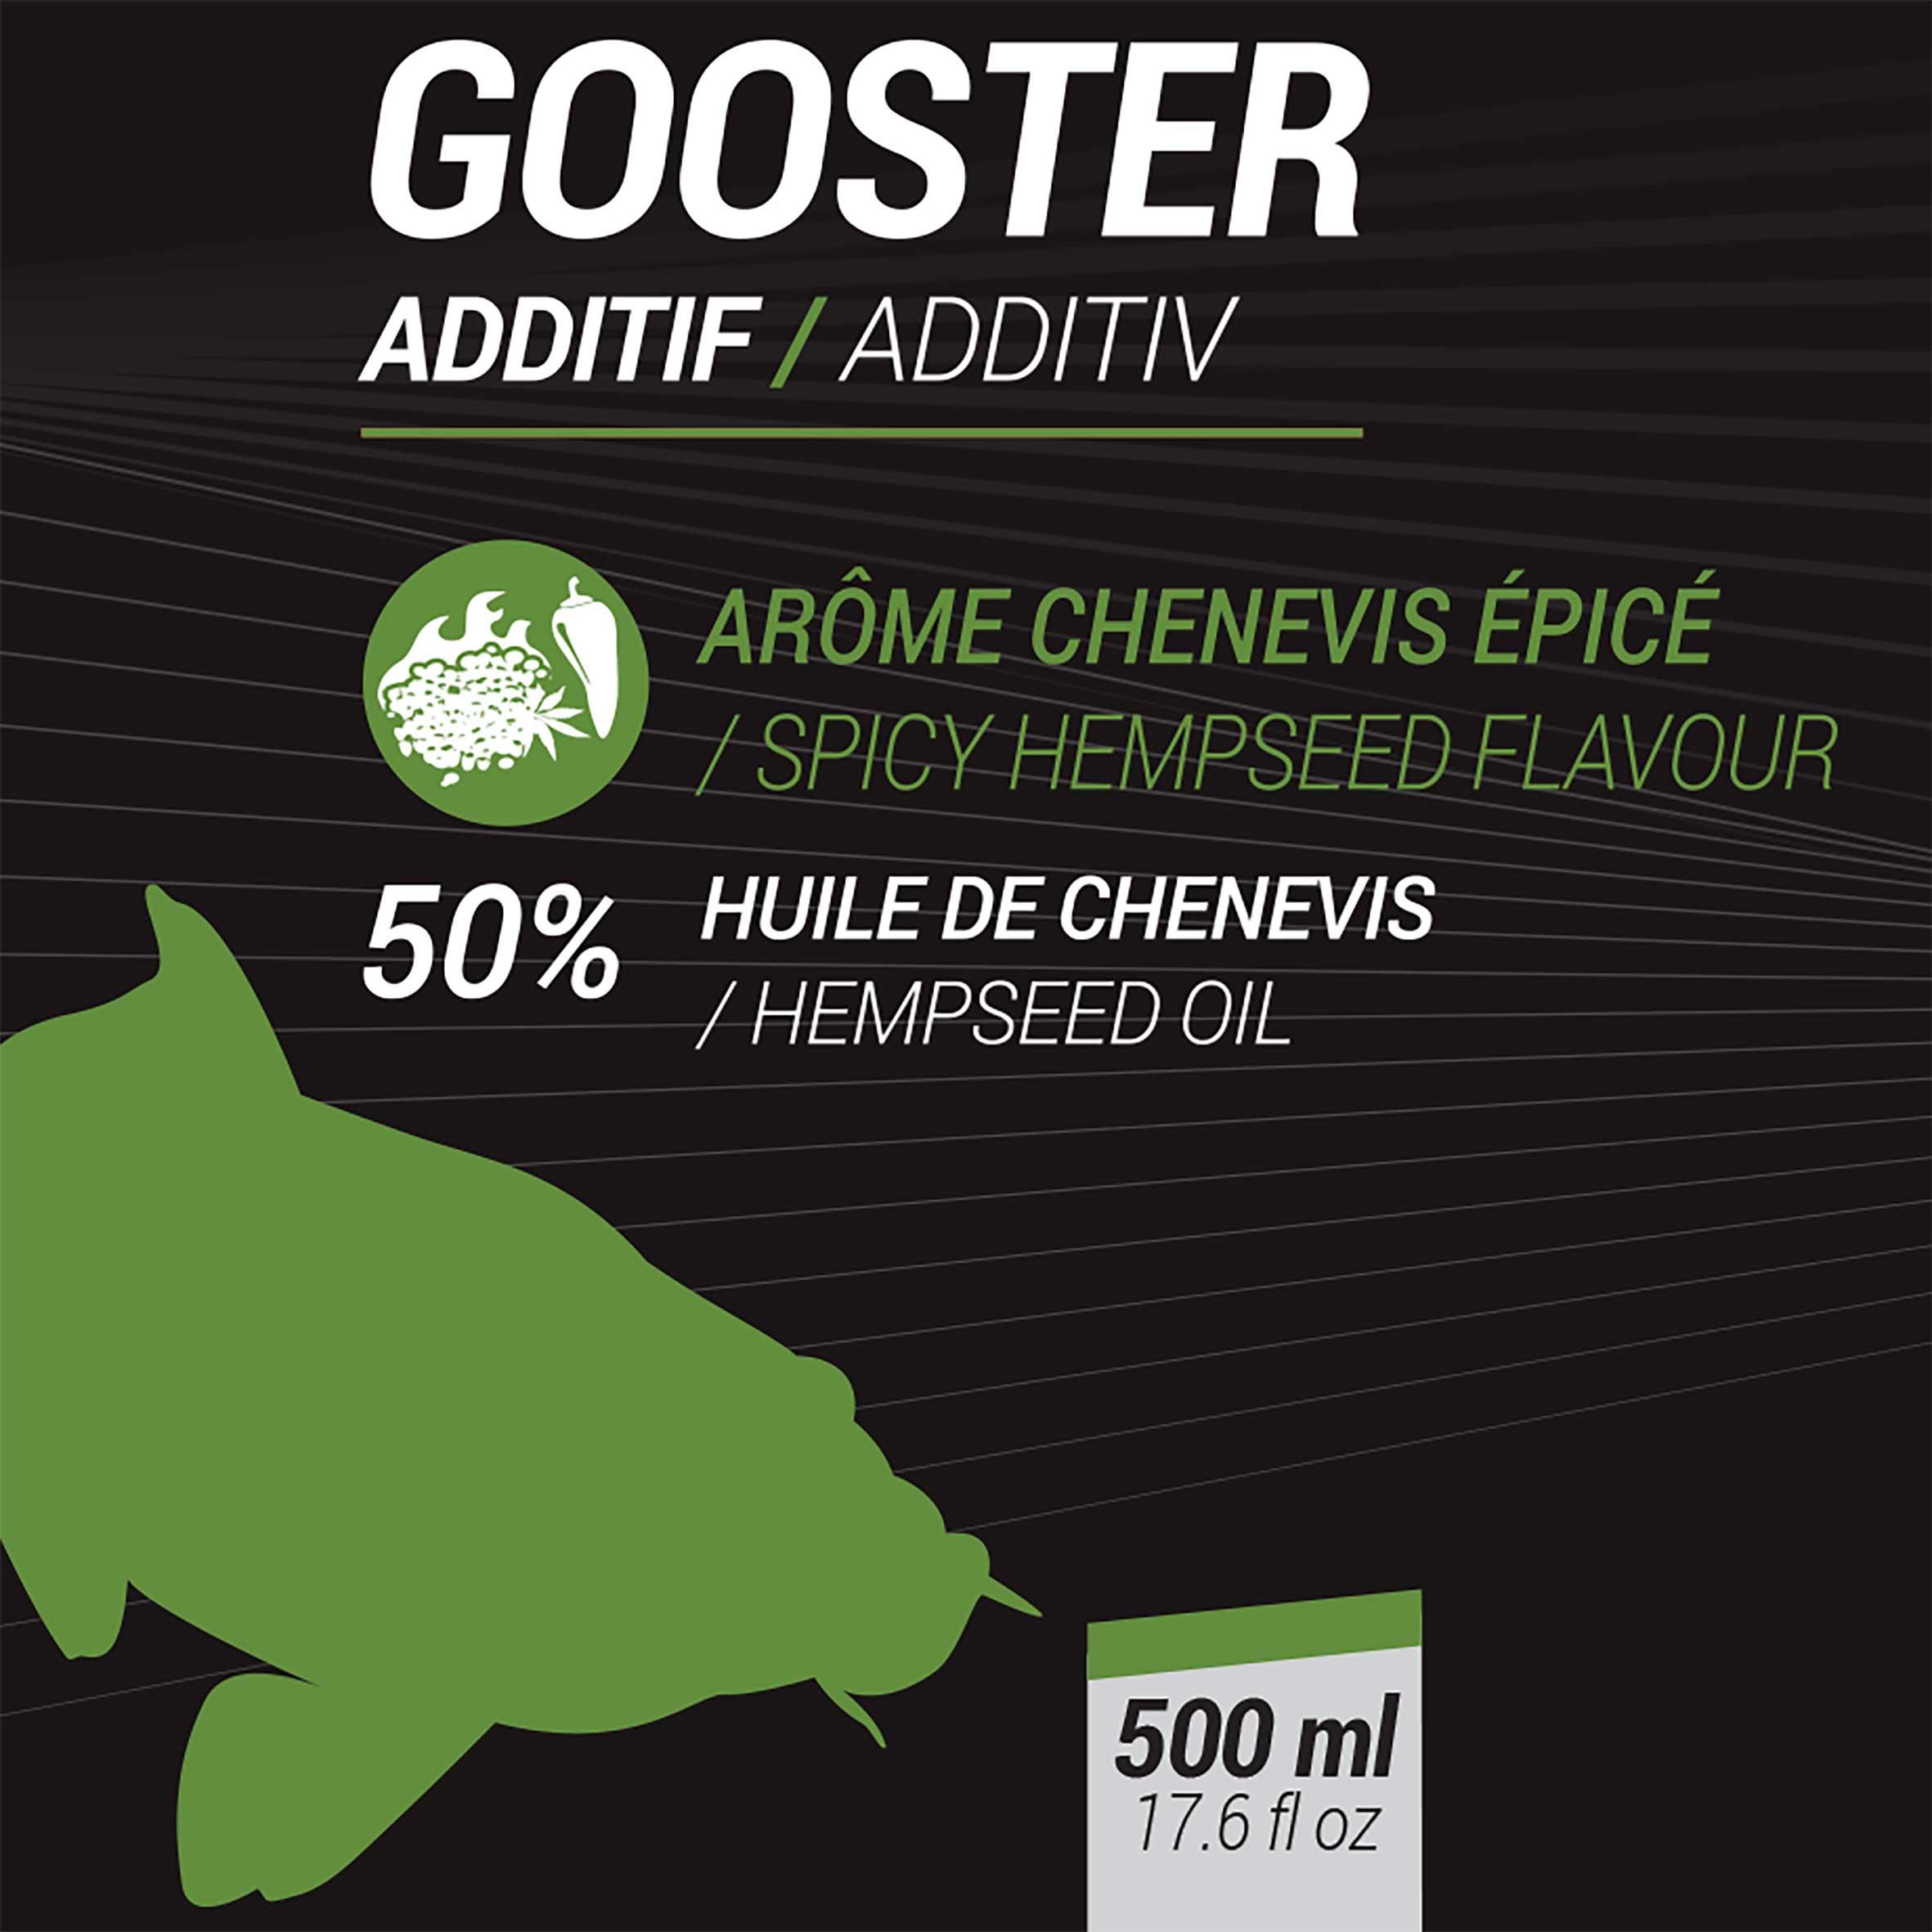 Gooster Additiv Still Fishing Liquid Additive Spicy Hemp 500ml 2/3